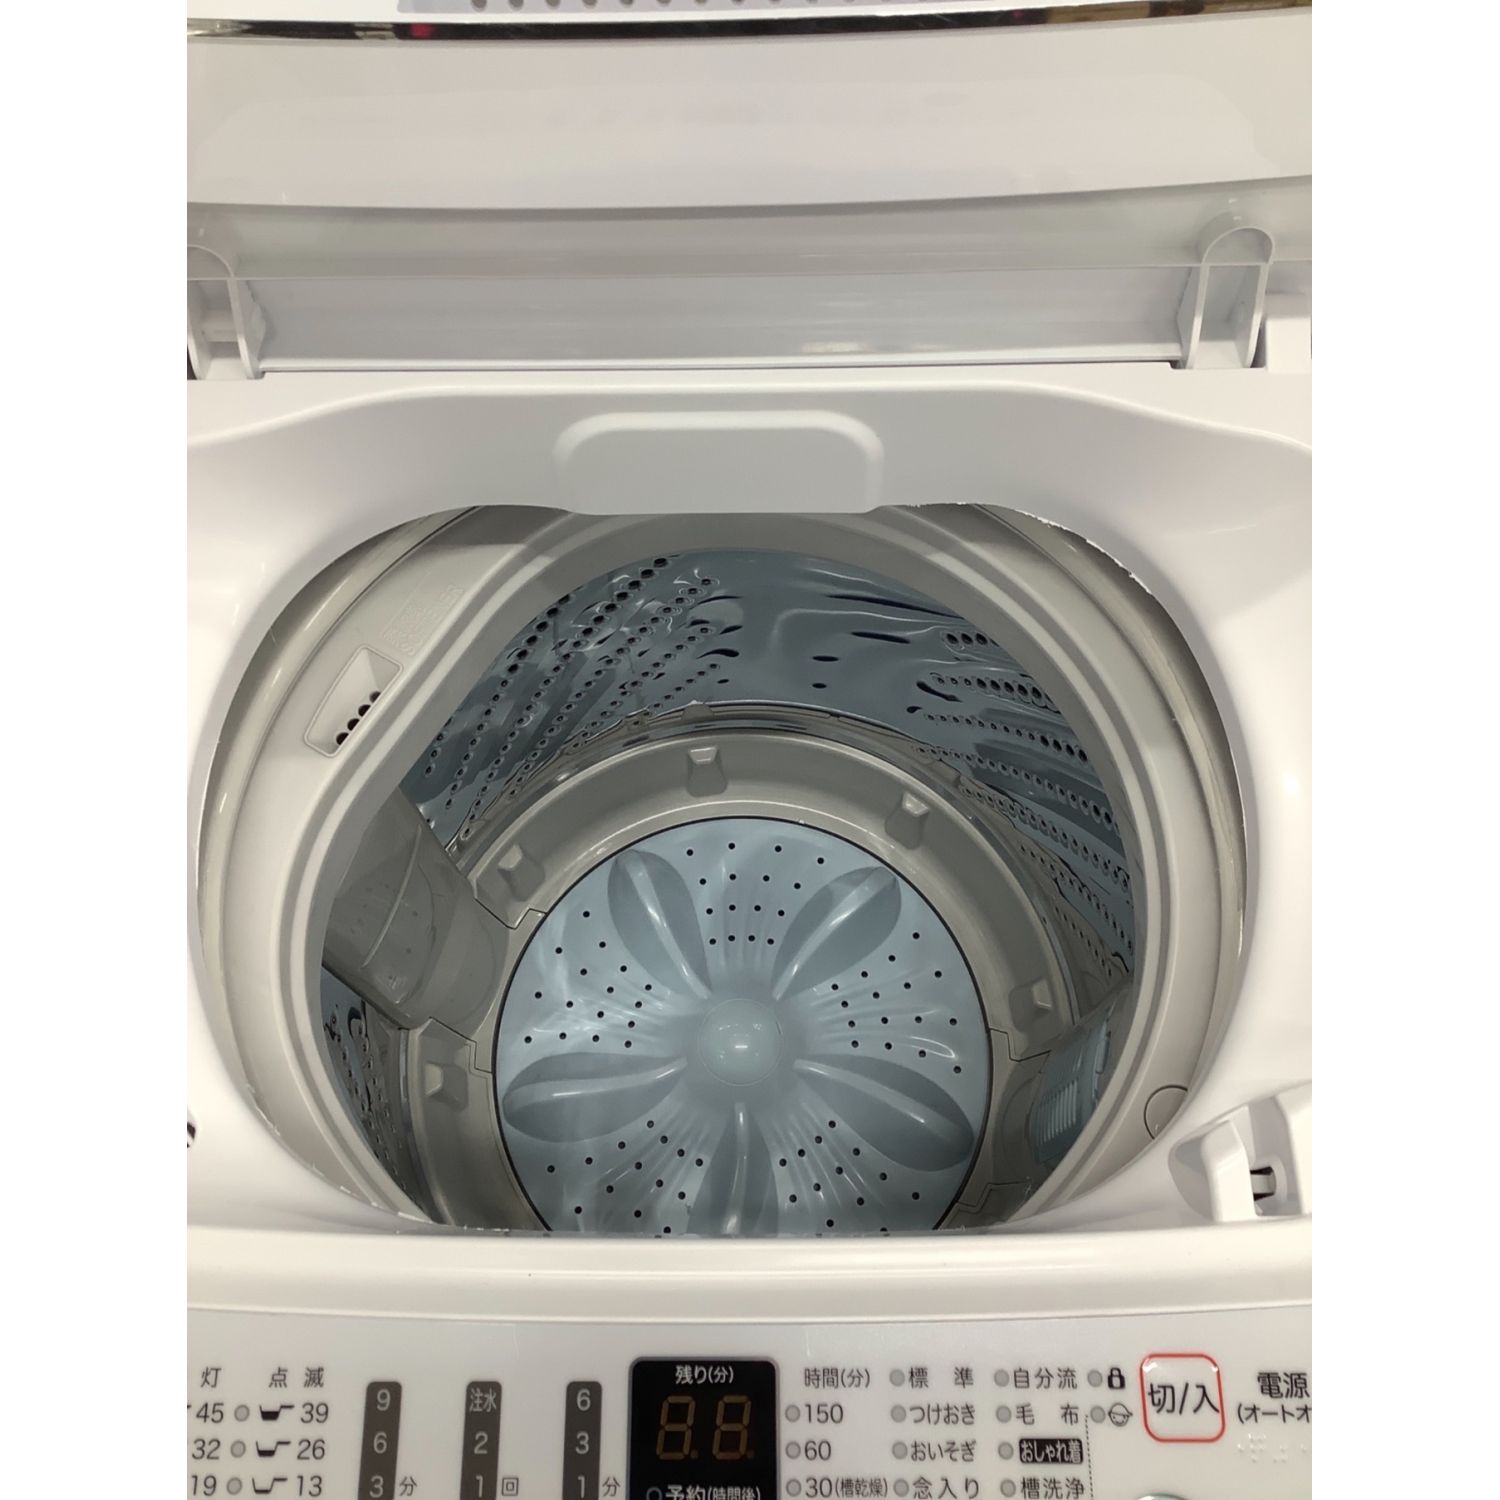 Hisense (ハイセンス) 洗濯機 4.5kg HW-E4503 2019年製 50Hz／60Hz